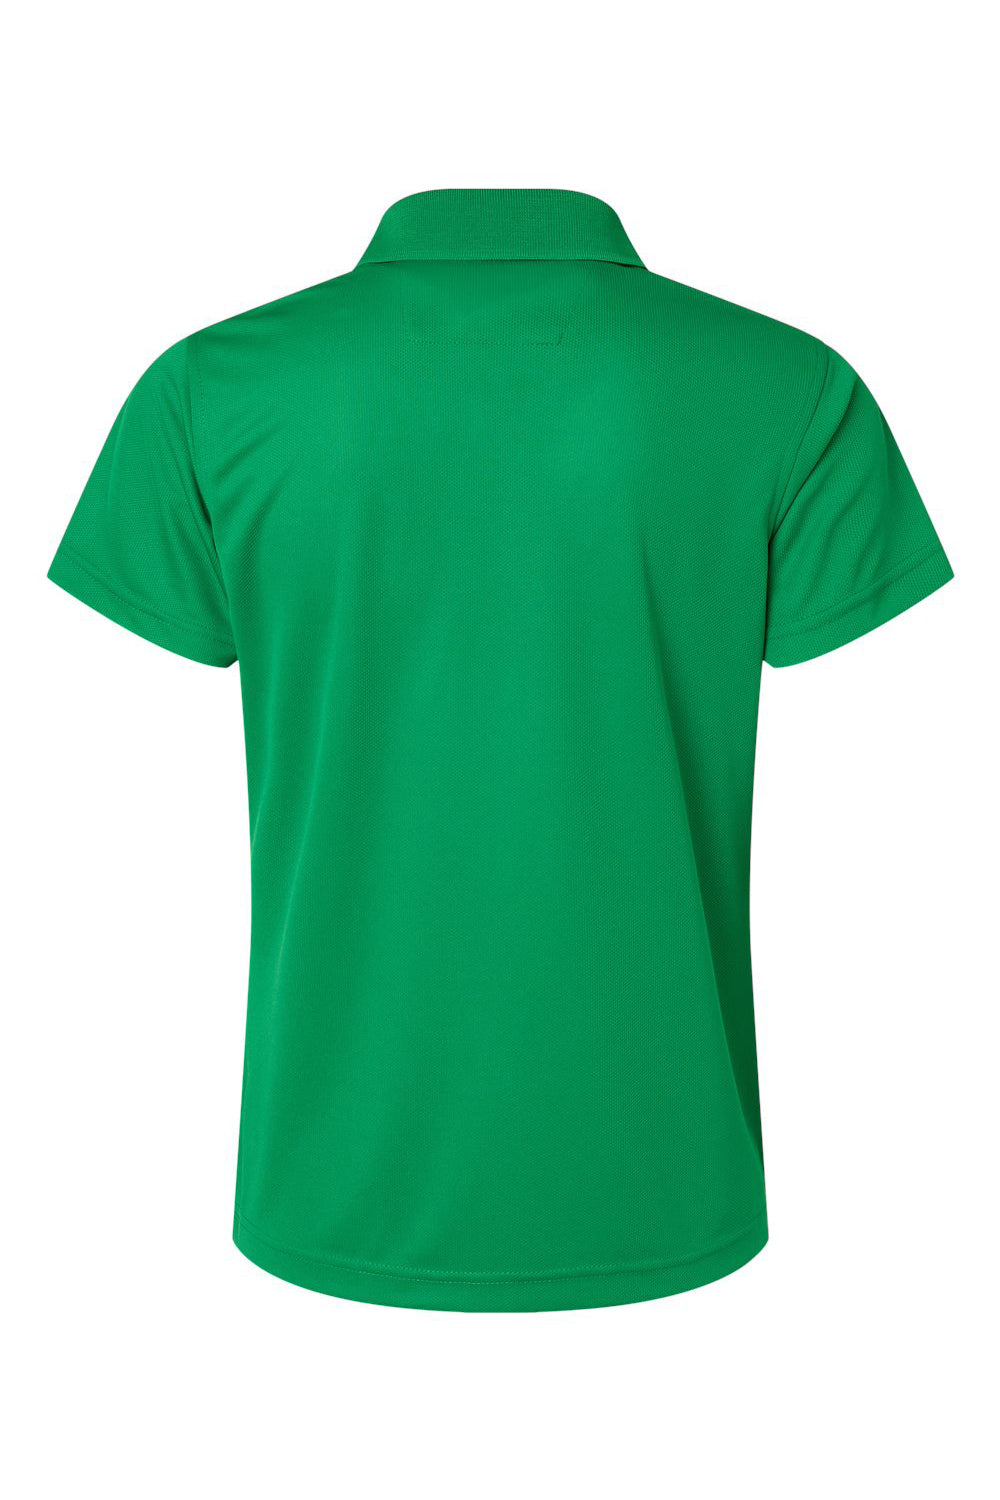 Paragon 104 Womens Saratoga Performance Mini Mesh Short Sleeve Polo Shirt Kelly Green Flat Back